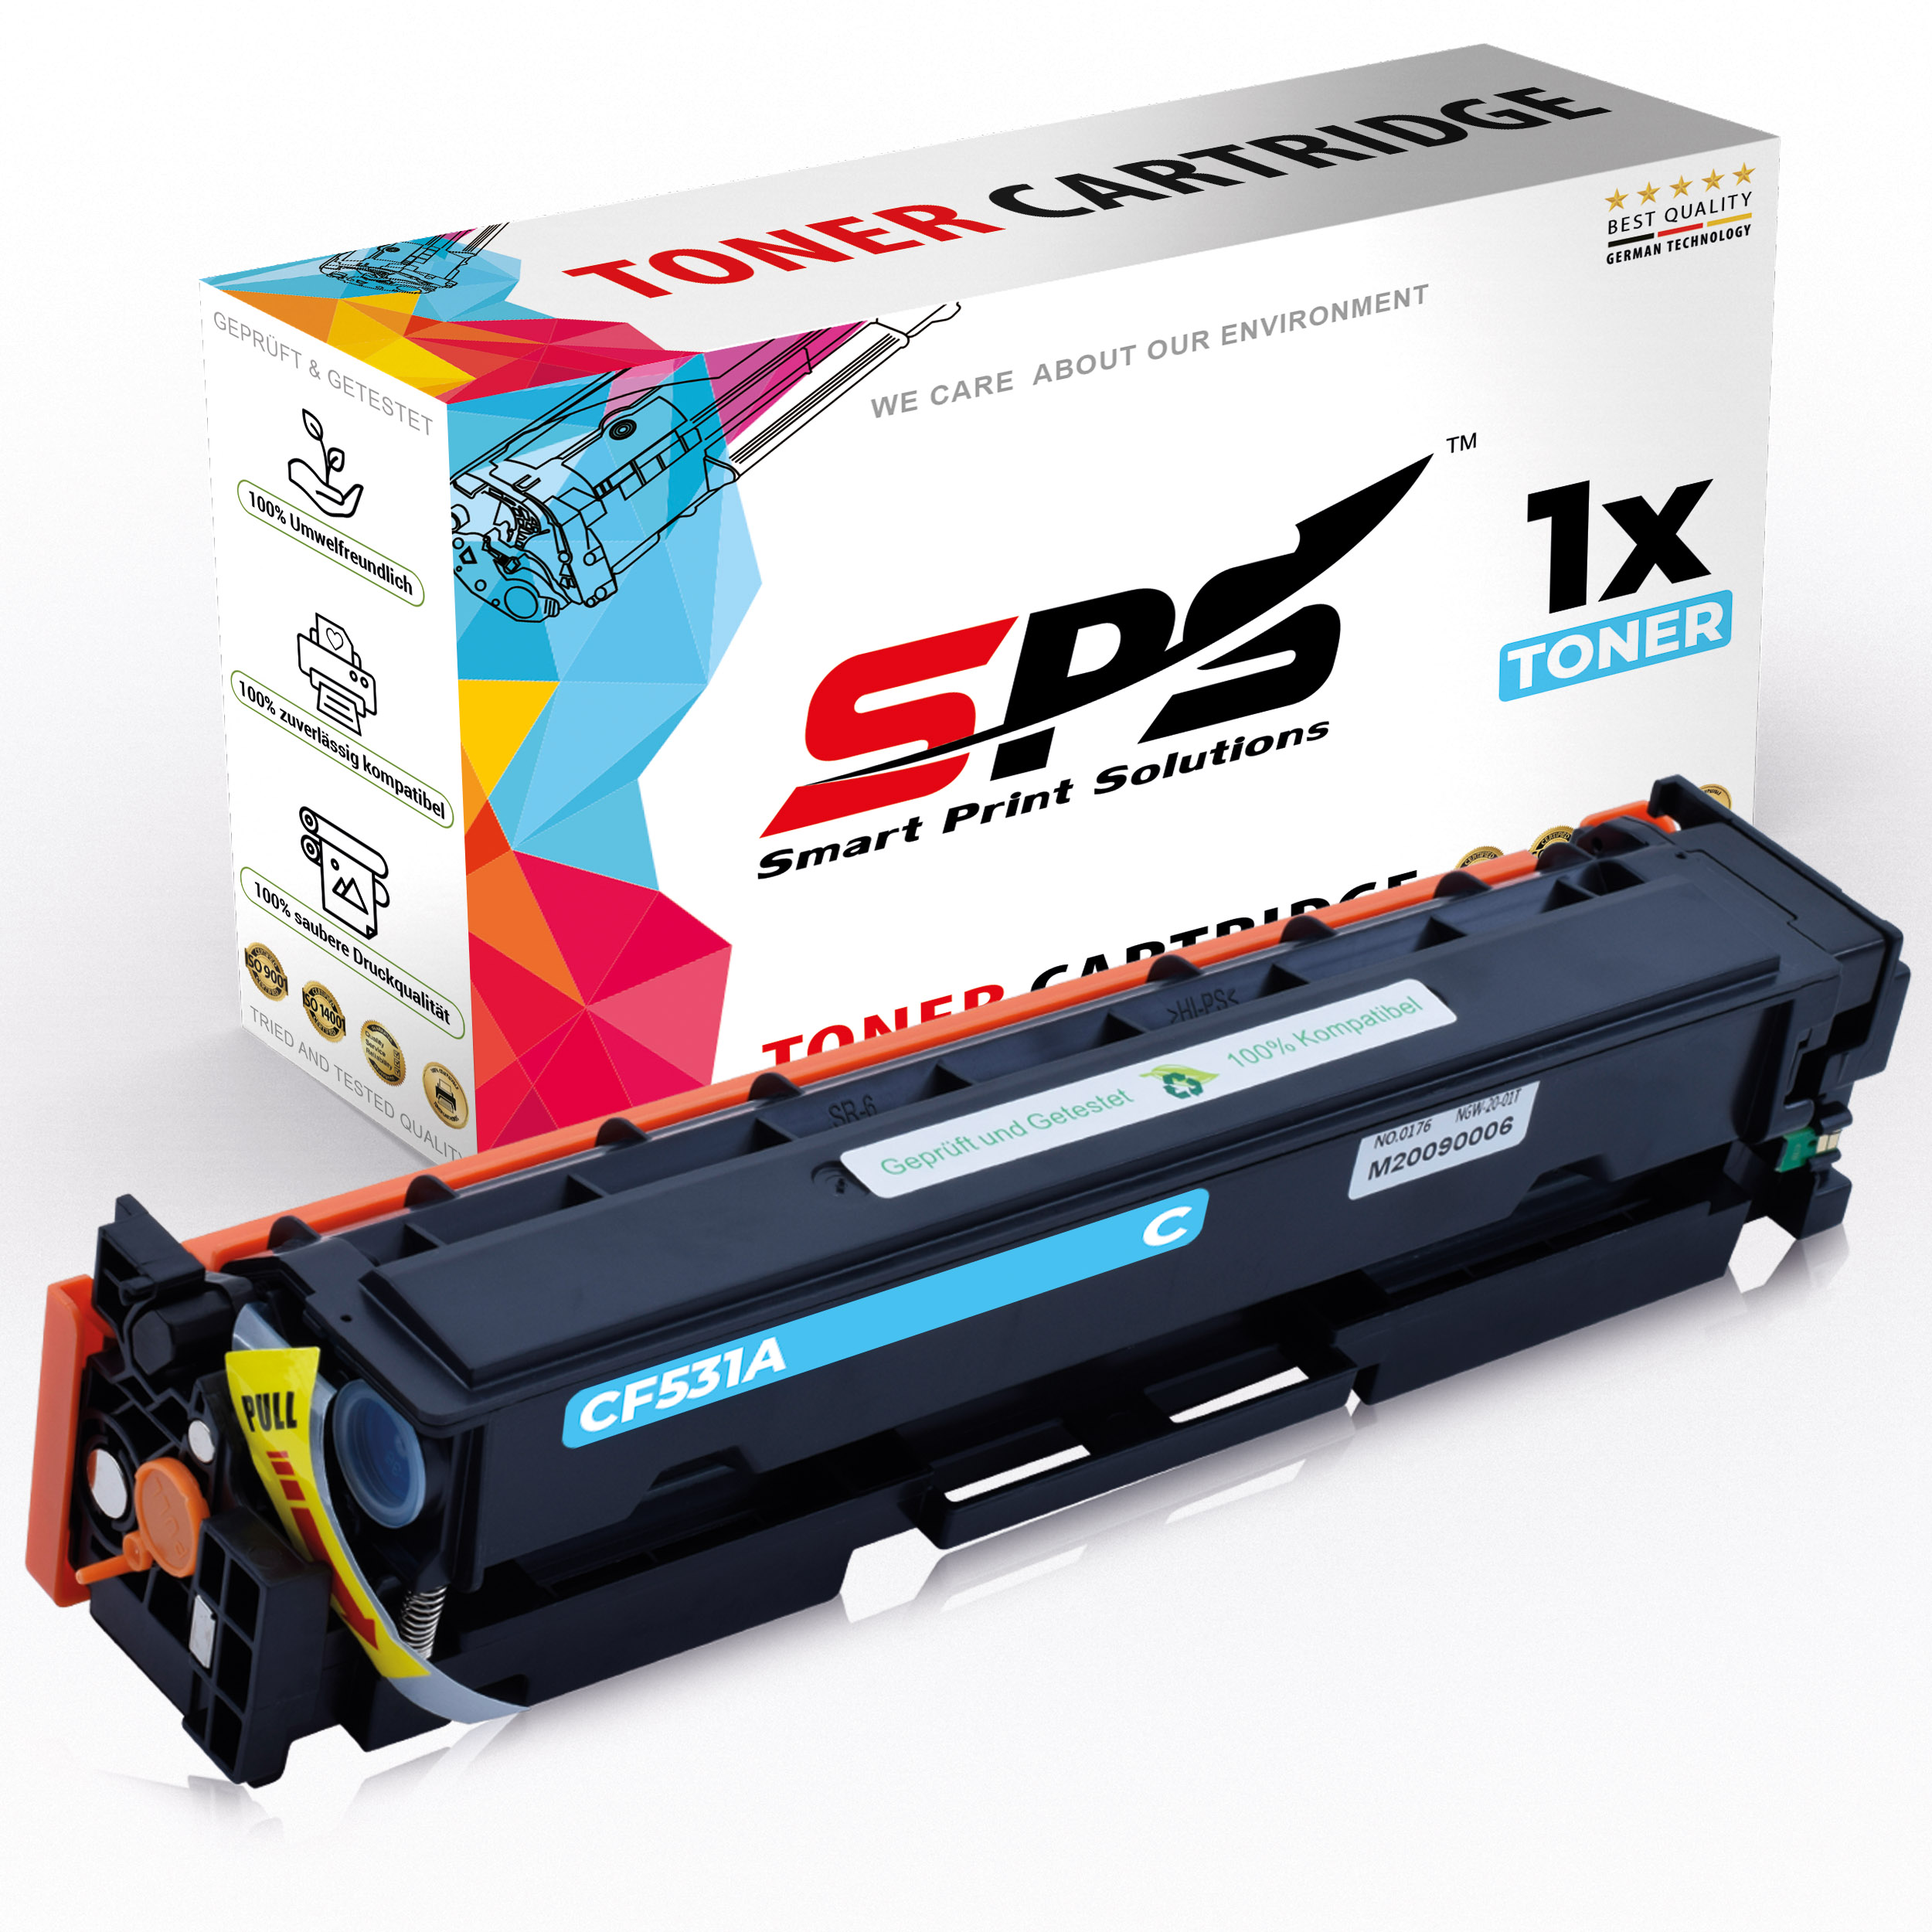 SPS S-16310 Toner Cyan (205A CF531A / M181) Laserjet MFP Pro Color